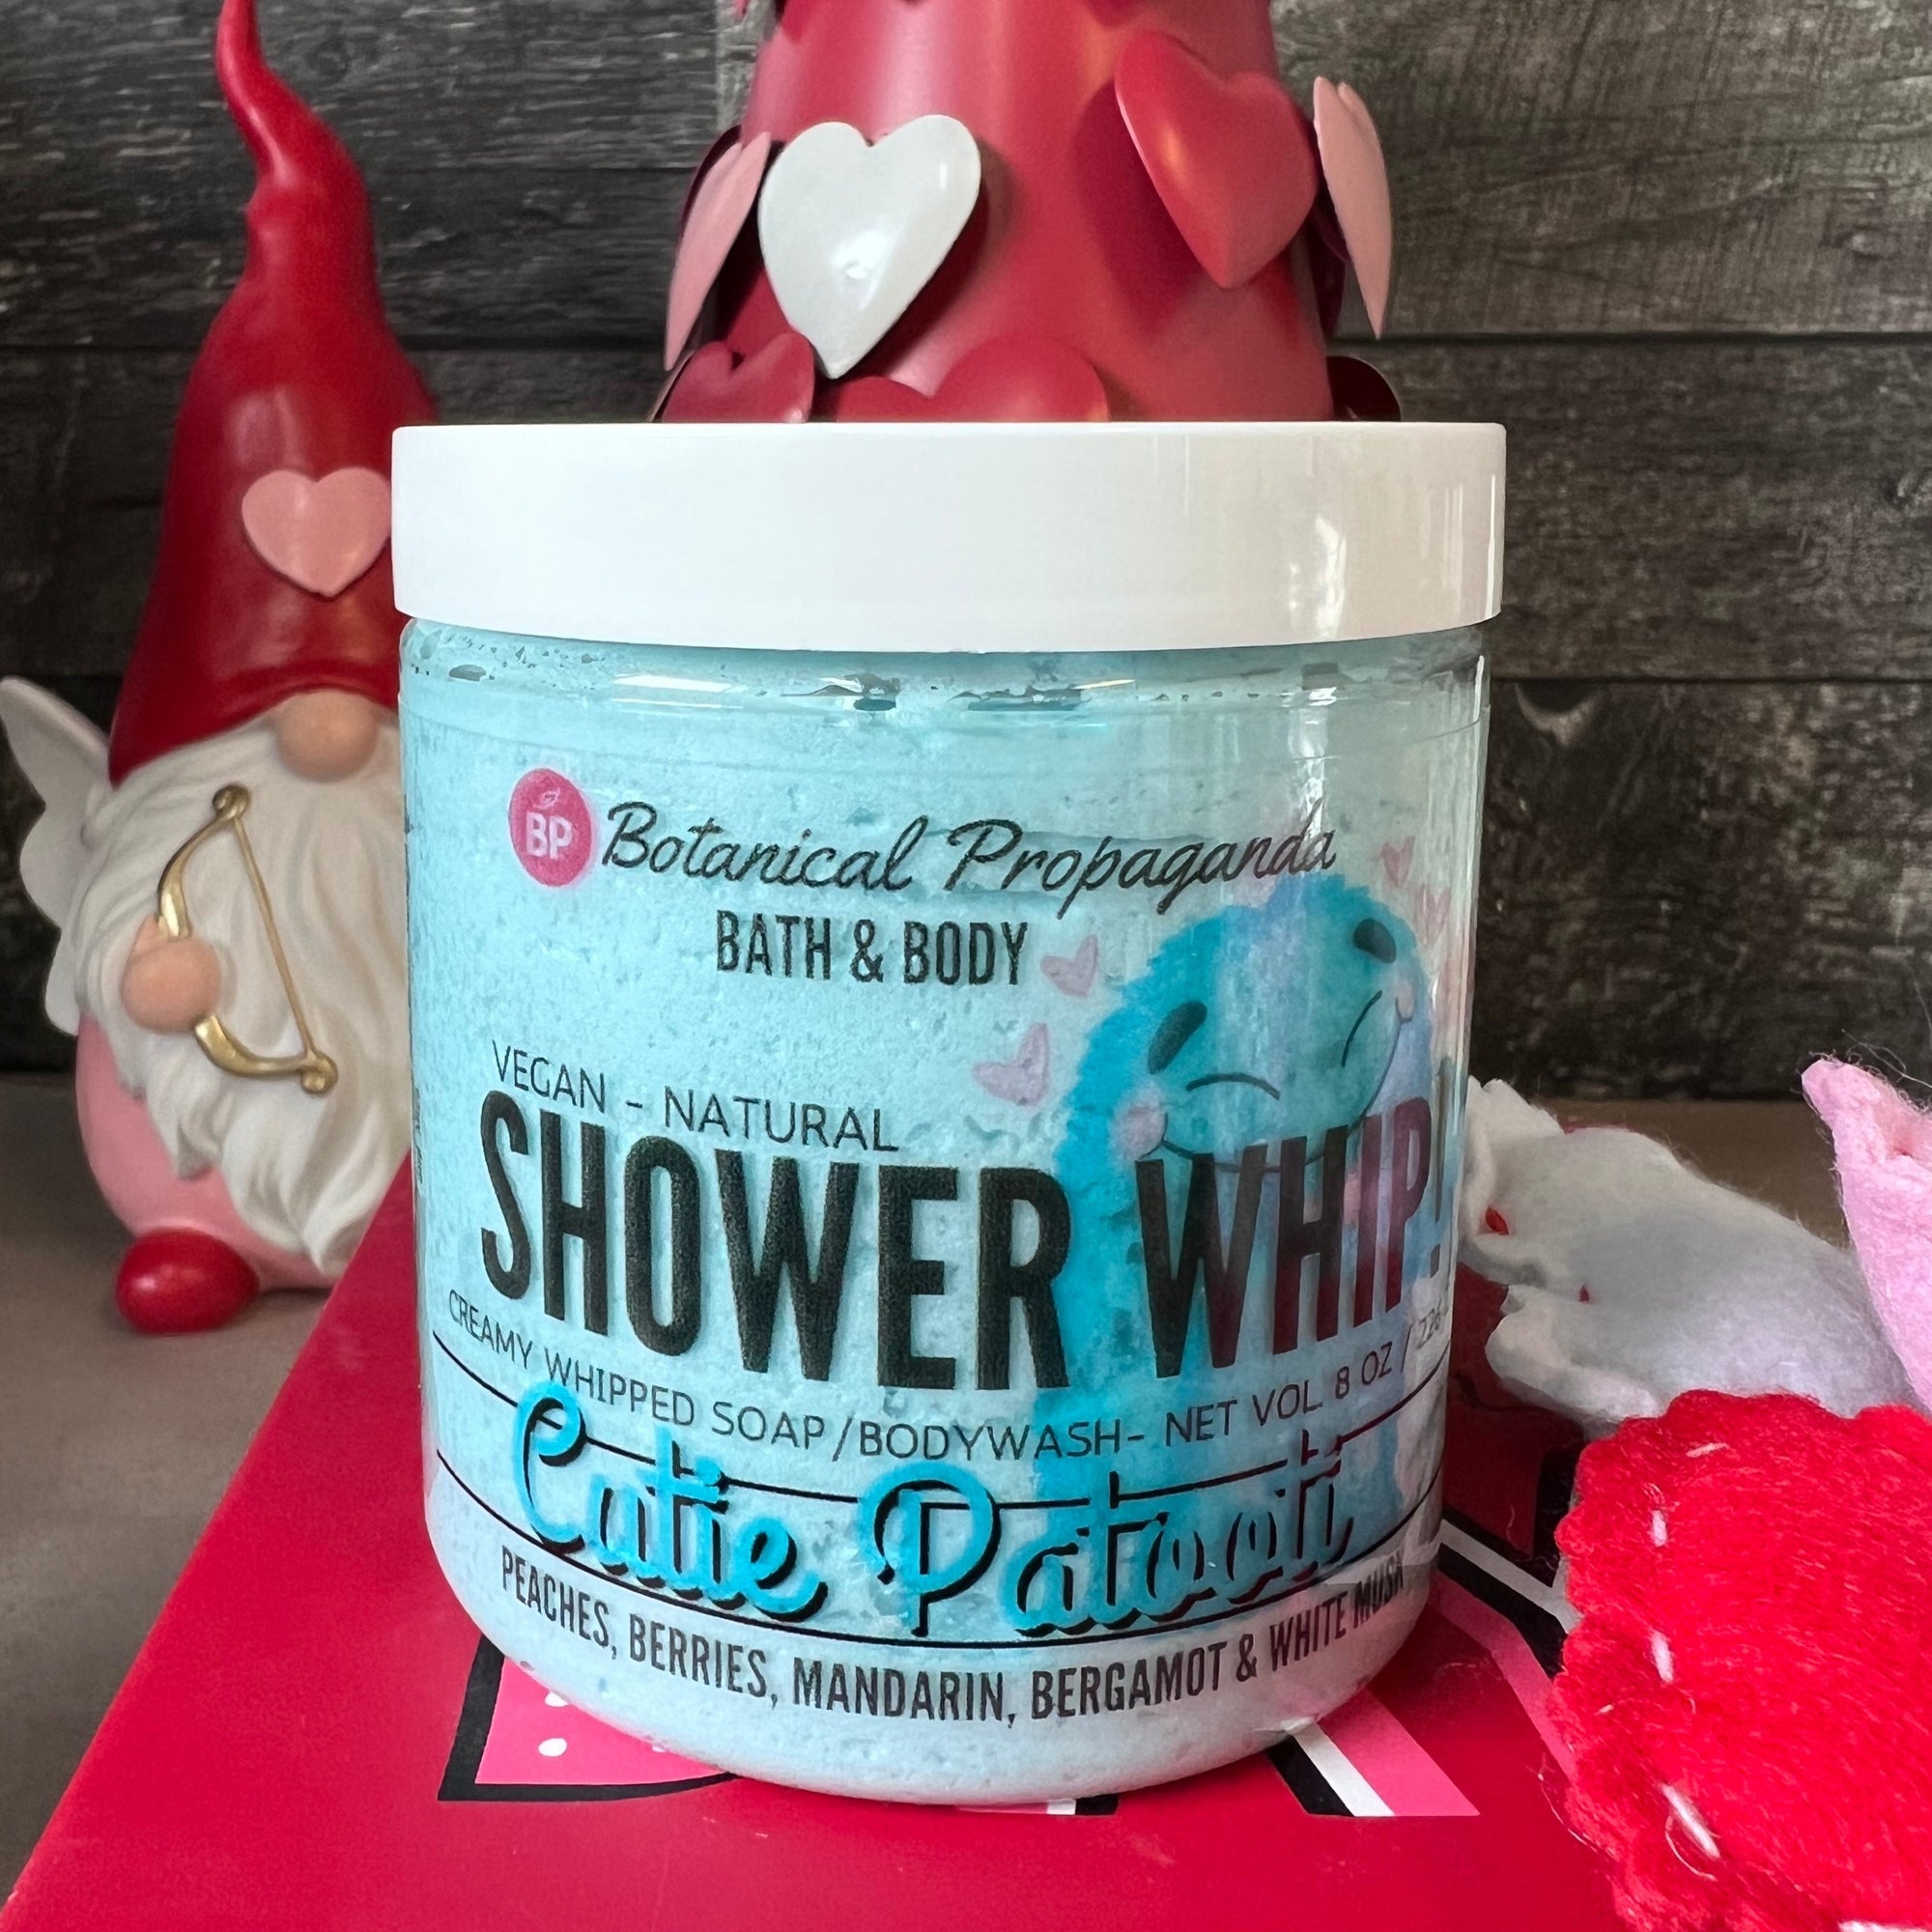 Cutie Patootie Shower Whip!